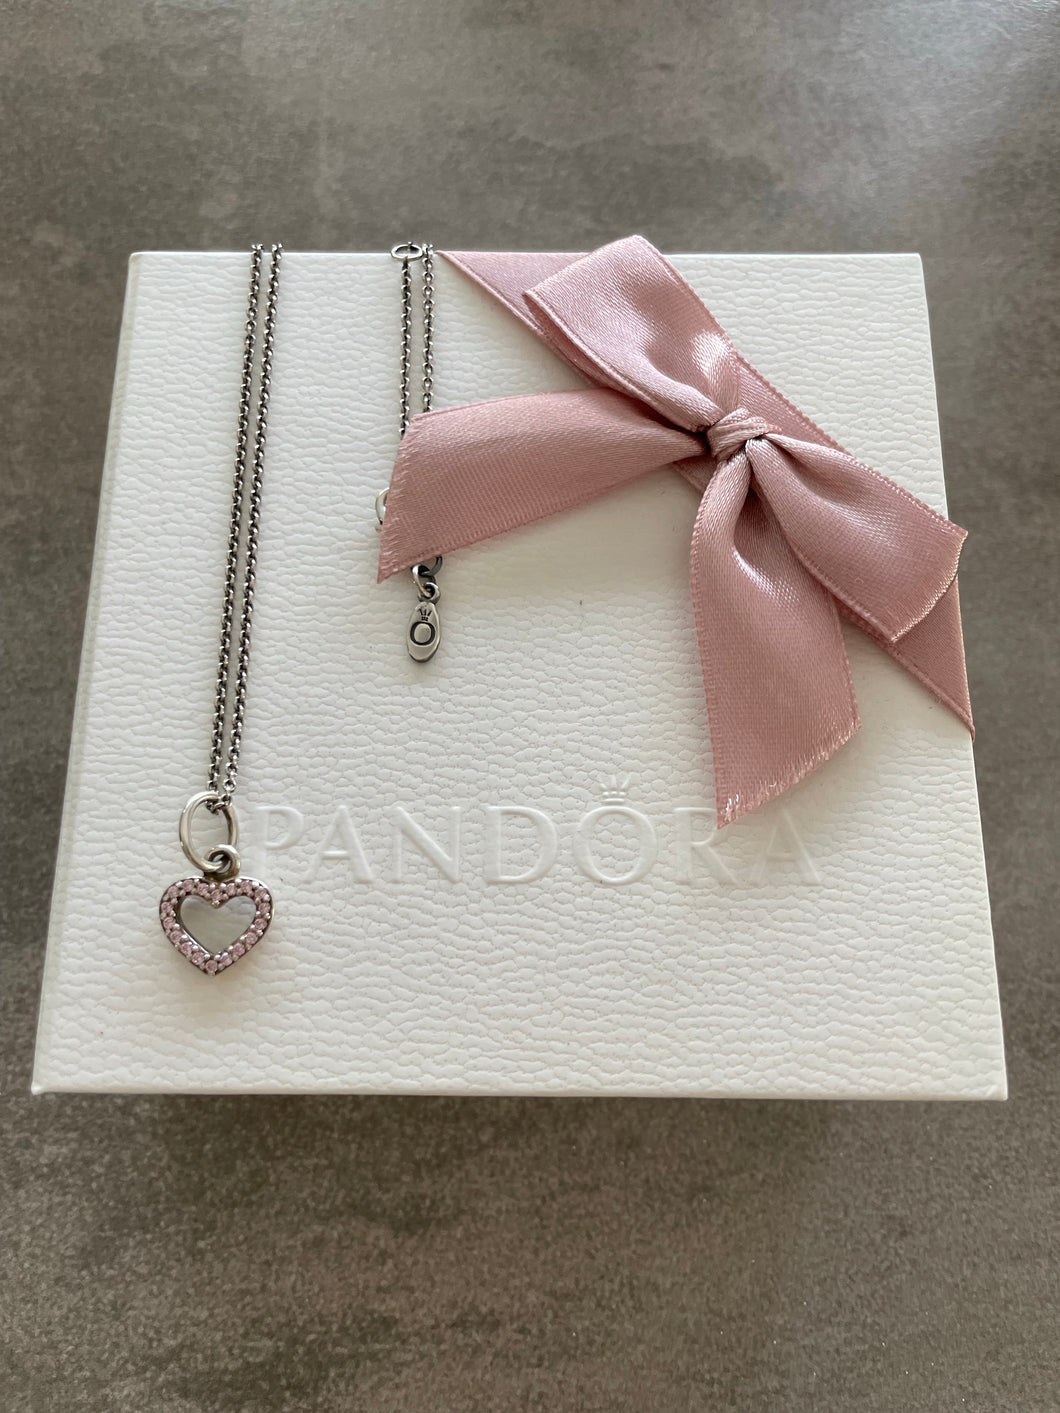 Pandora Kette - Herz rosa